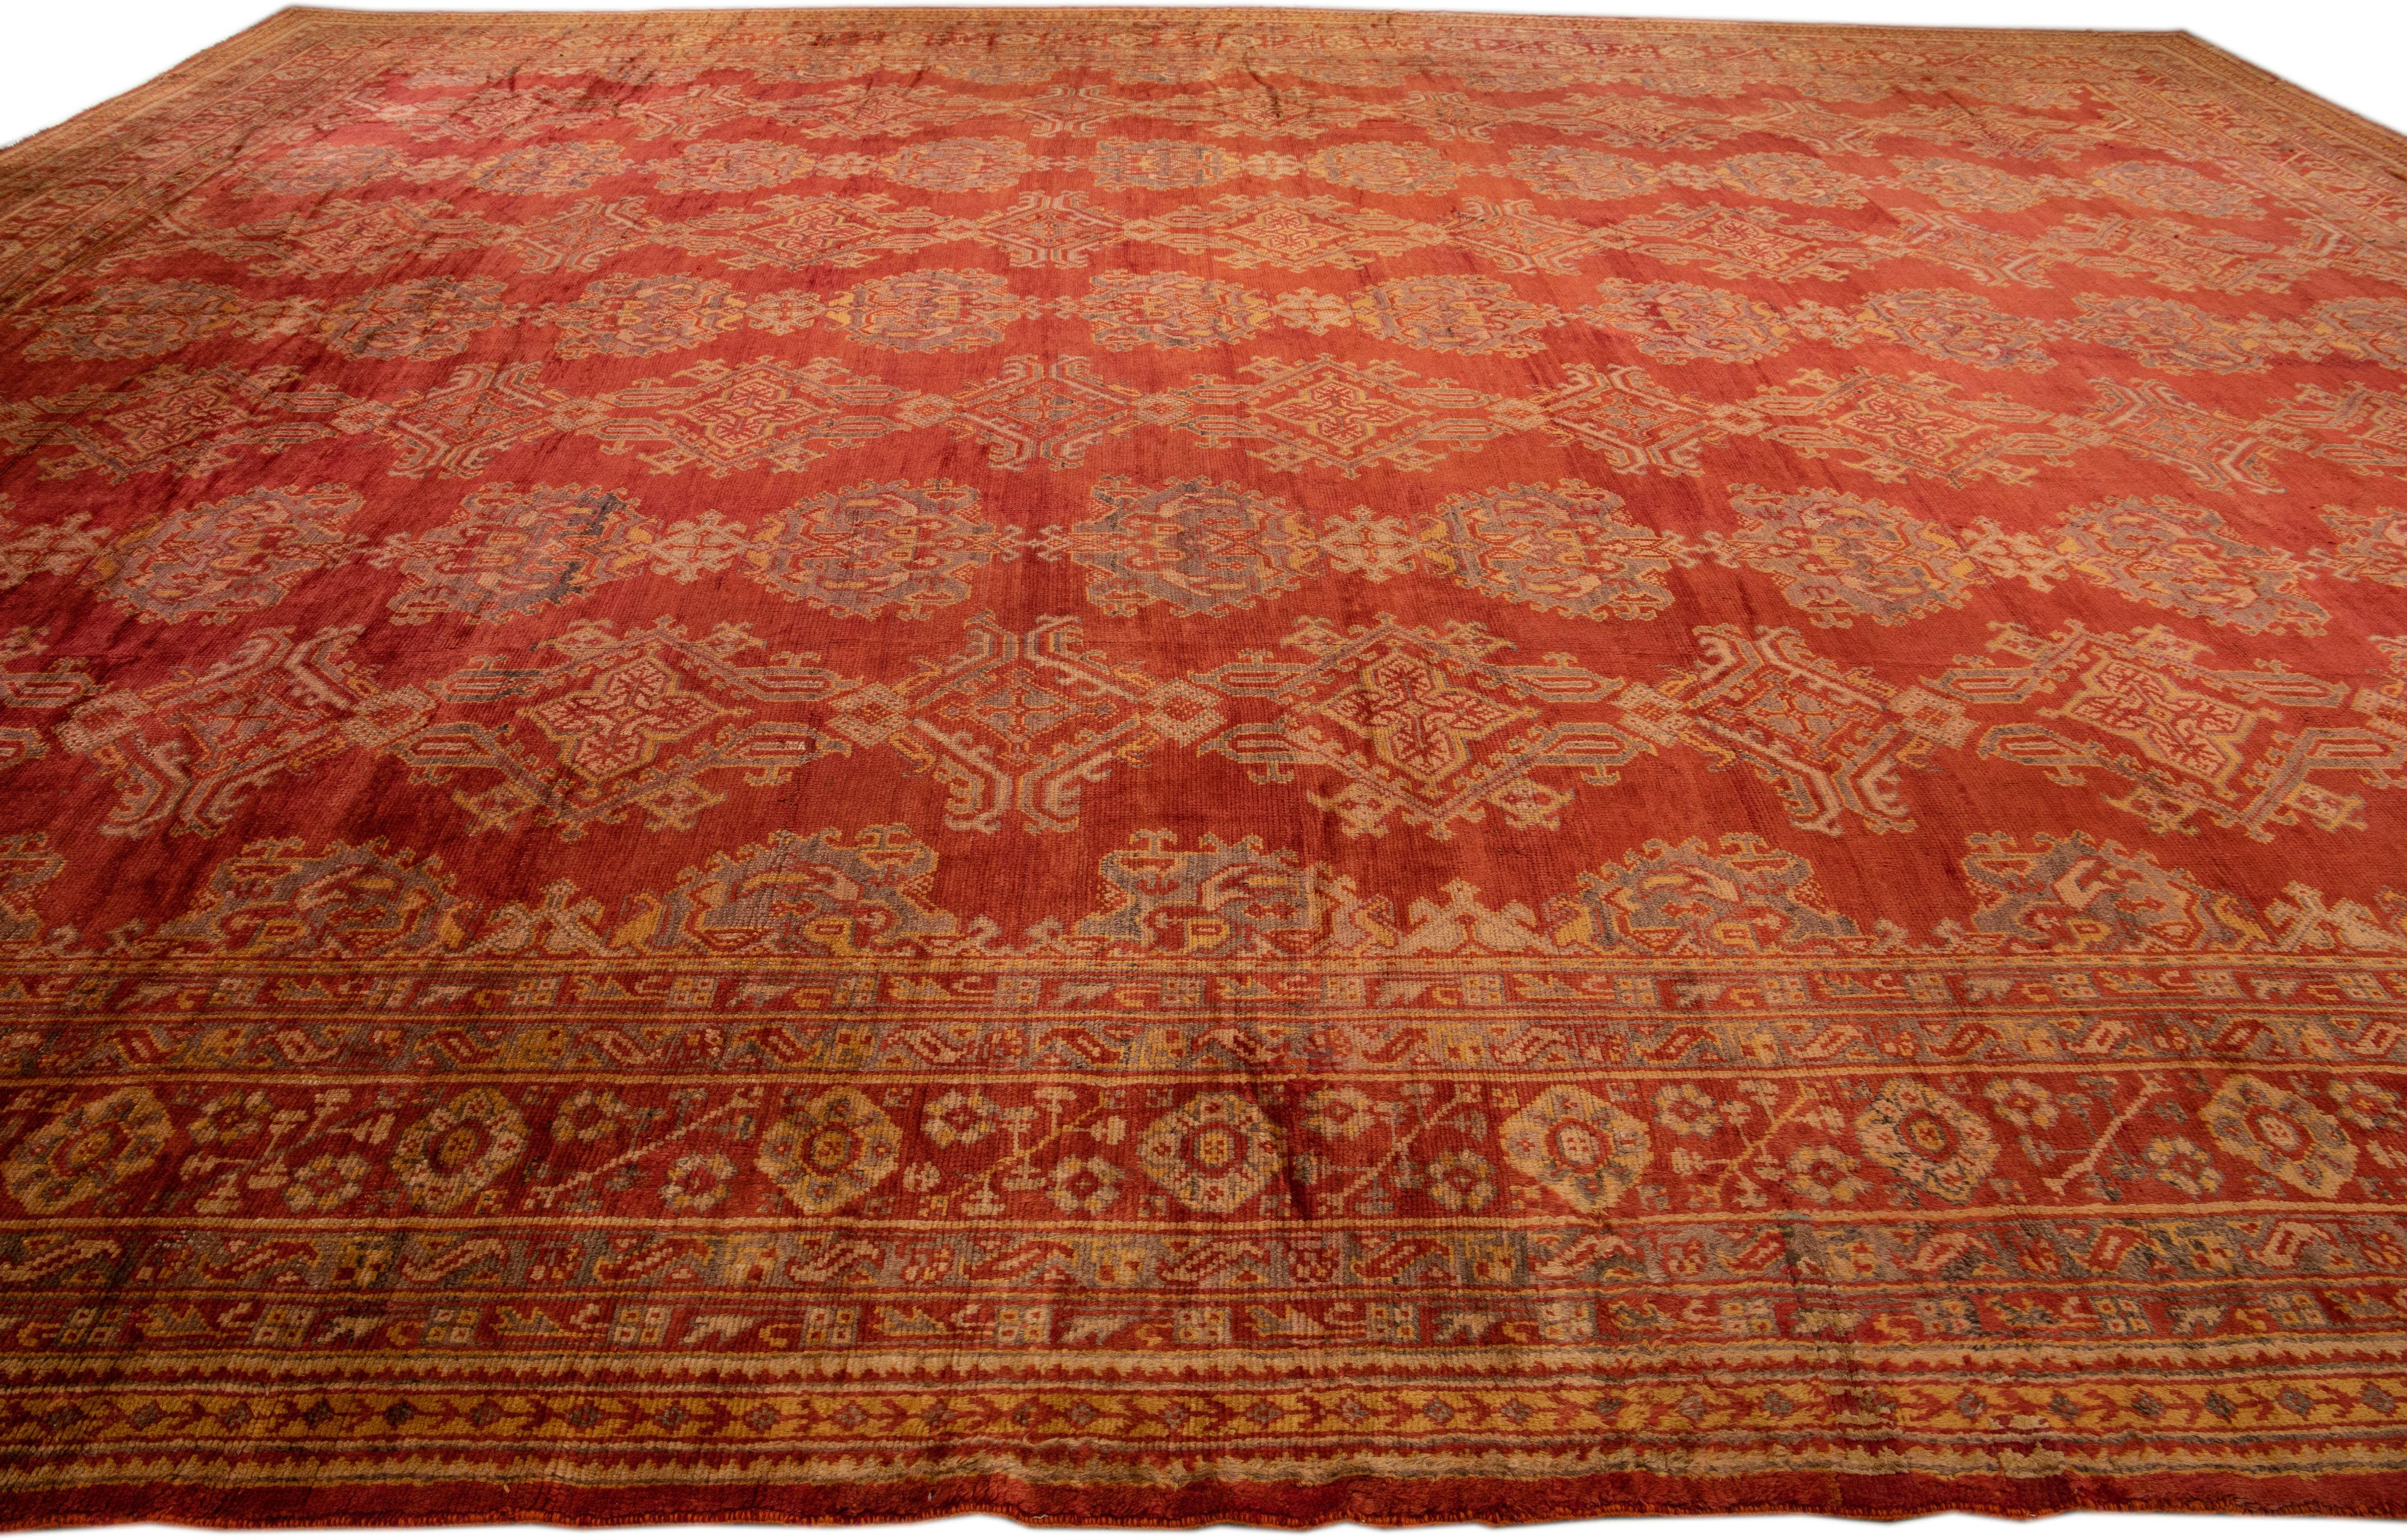 Antique Turkish Oushak Handmade Orange-Rust Wool Rug with Geometric Pattern For Sale 1